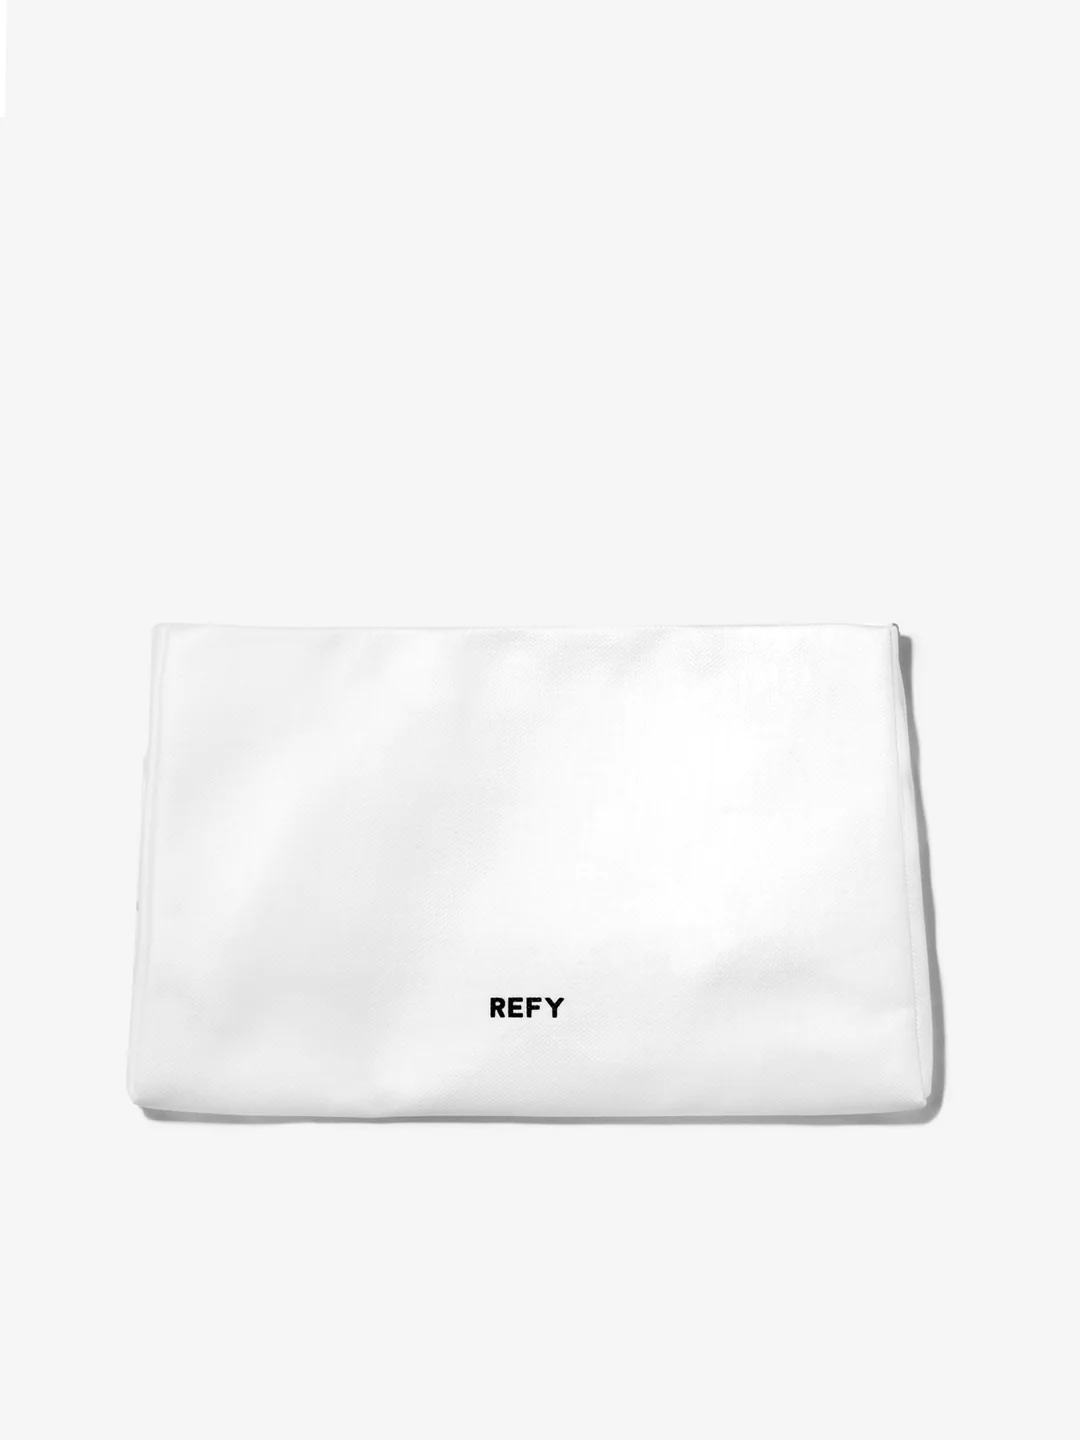 refy signature bag